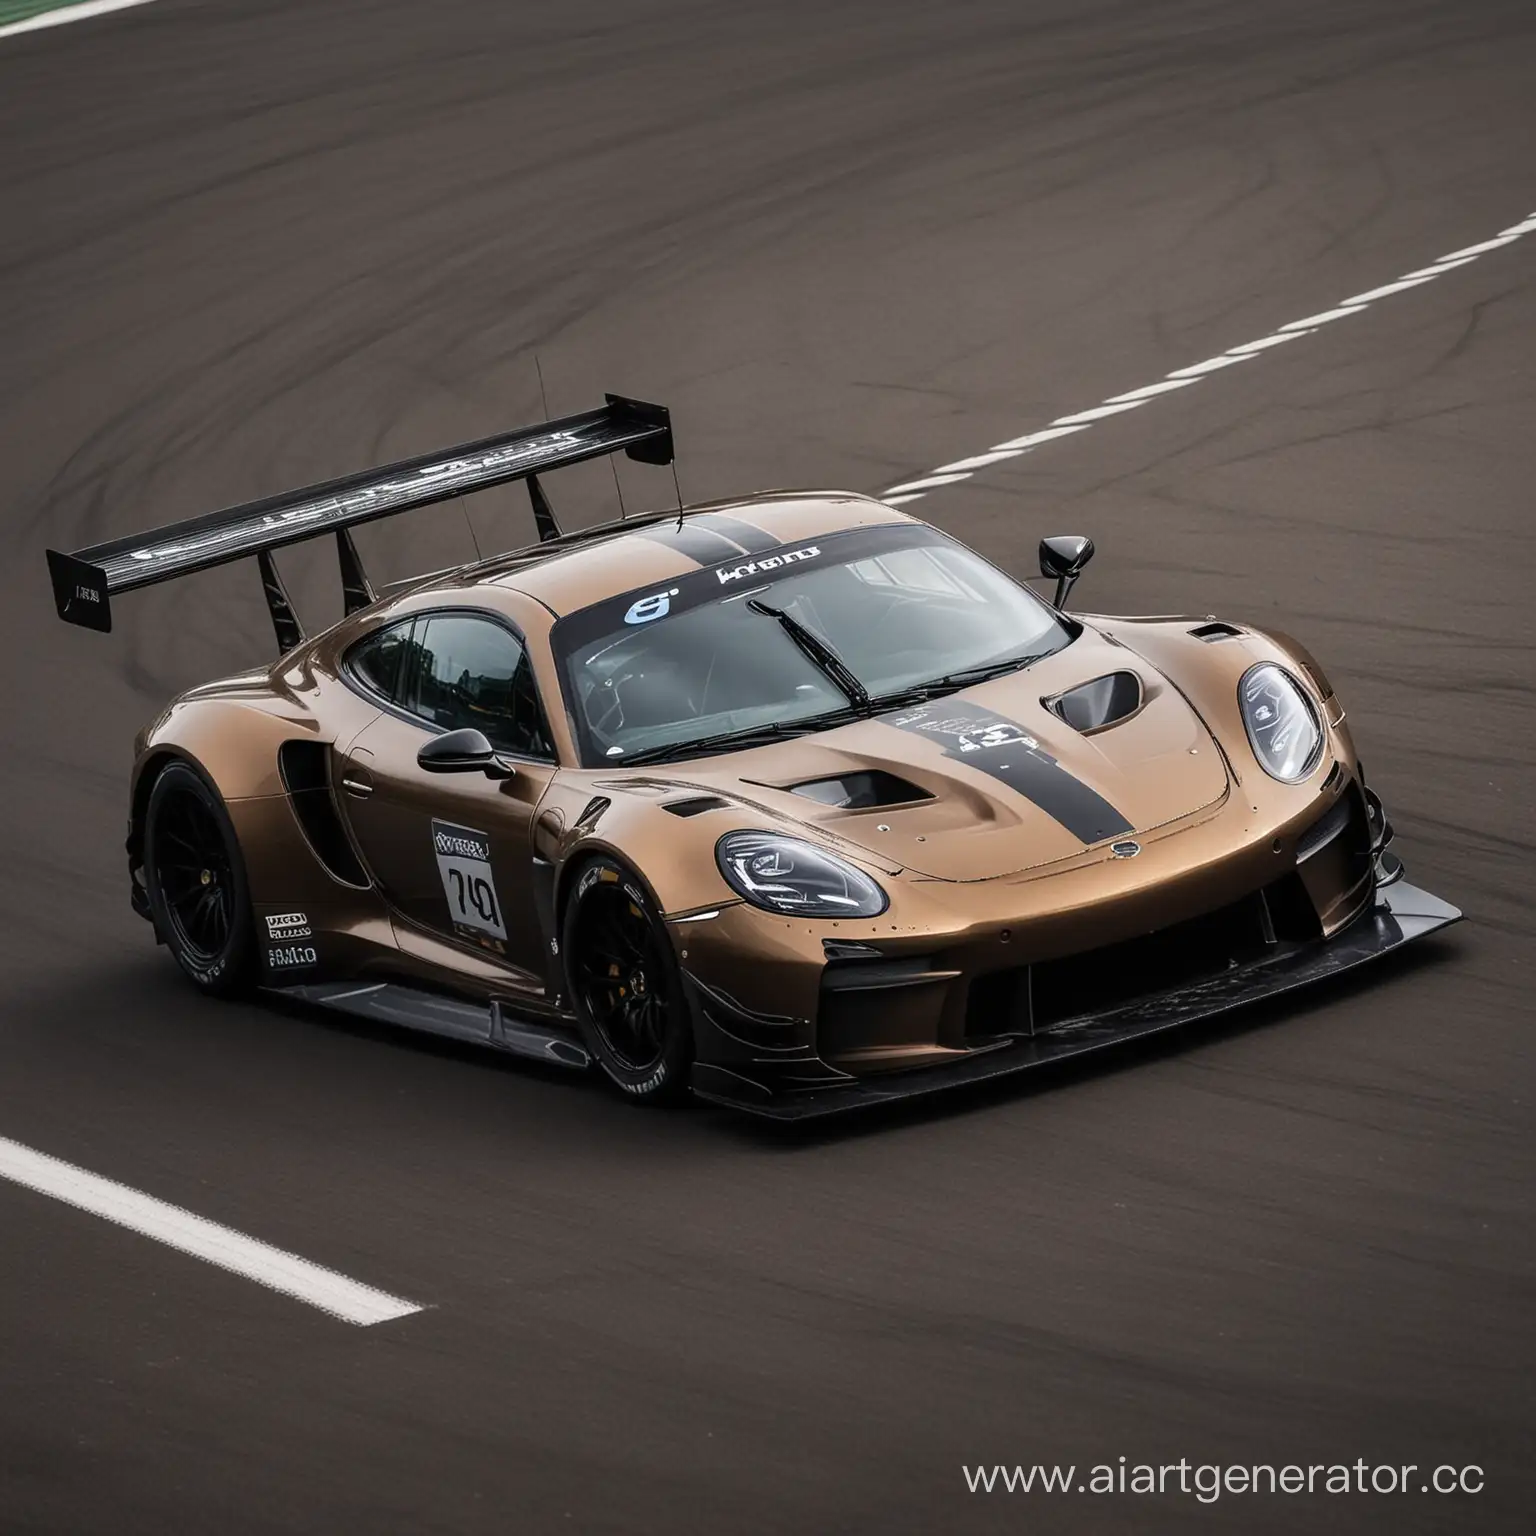 Dark-Gunbronze-GT3-Racing-Car-Speeding-on-Track